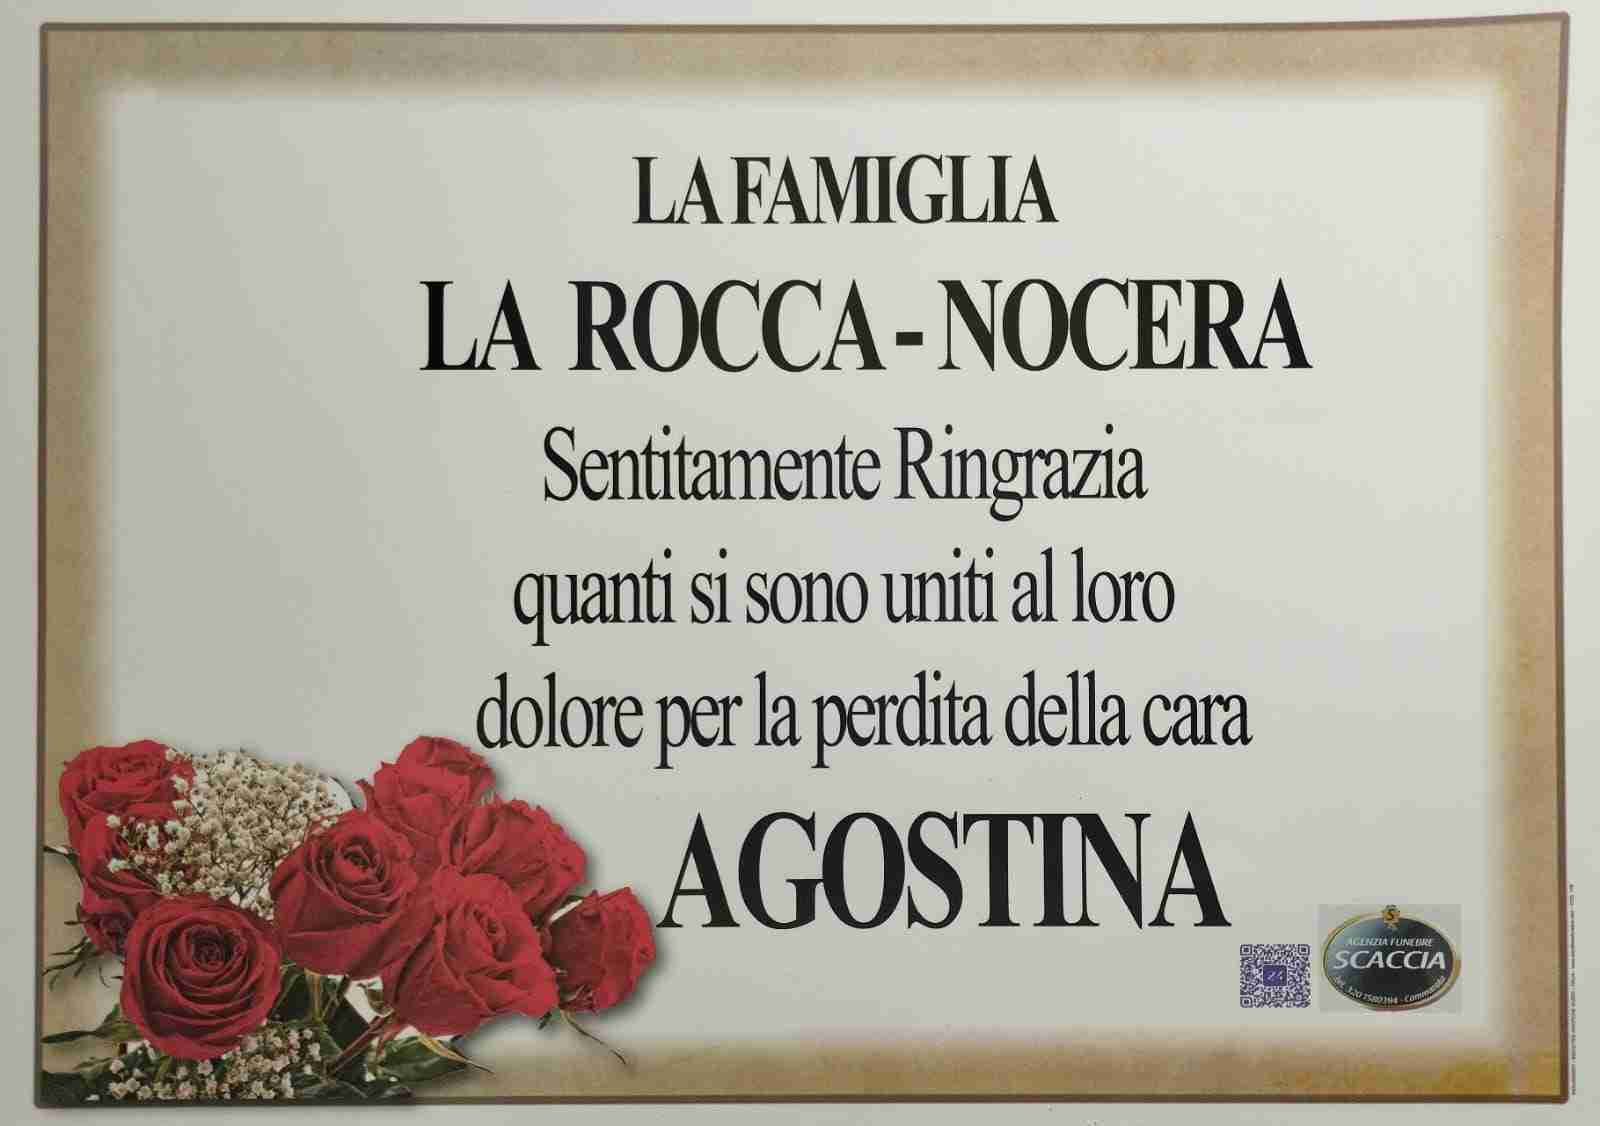 Agostina La Rocca